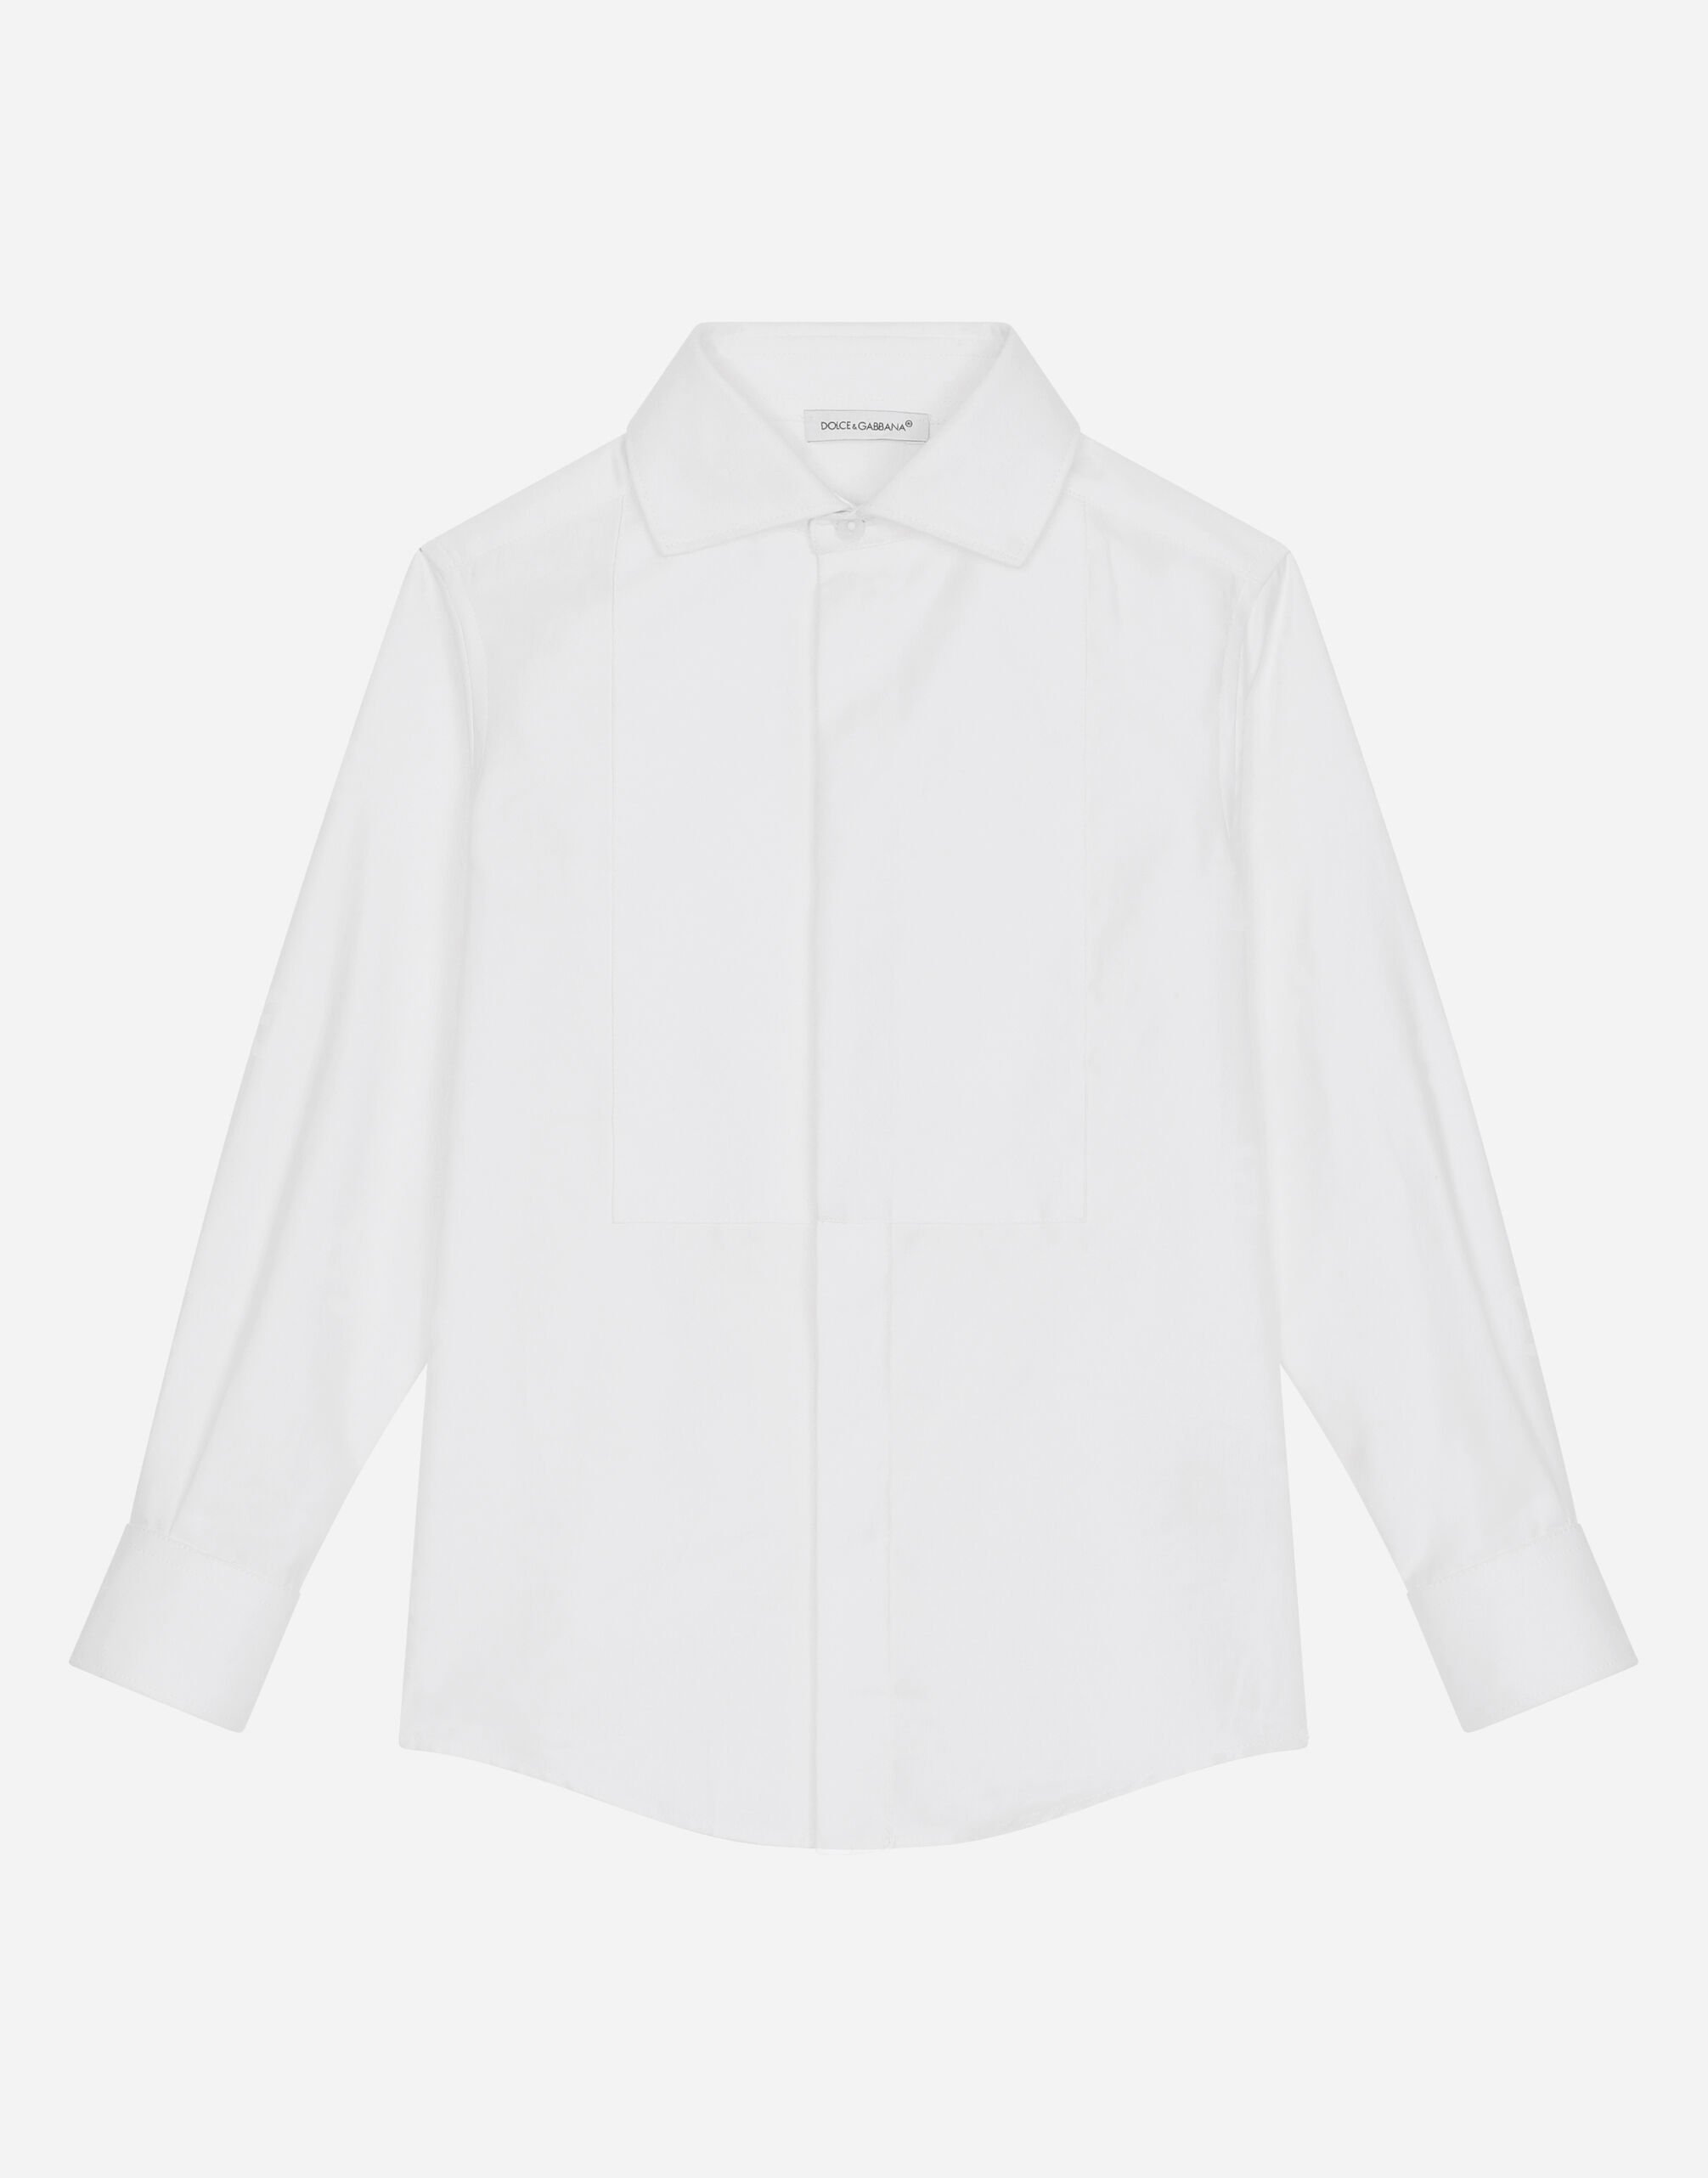 Dolce & Gabbana Poplin jacquard tuxedo shirt with DG logo Print L44S11HI1S6